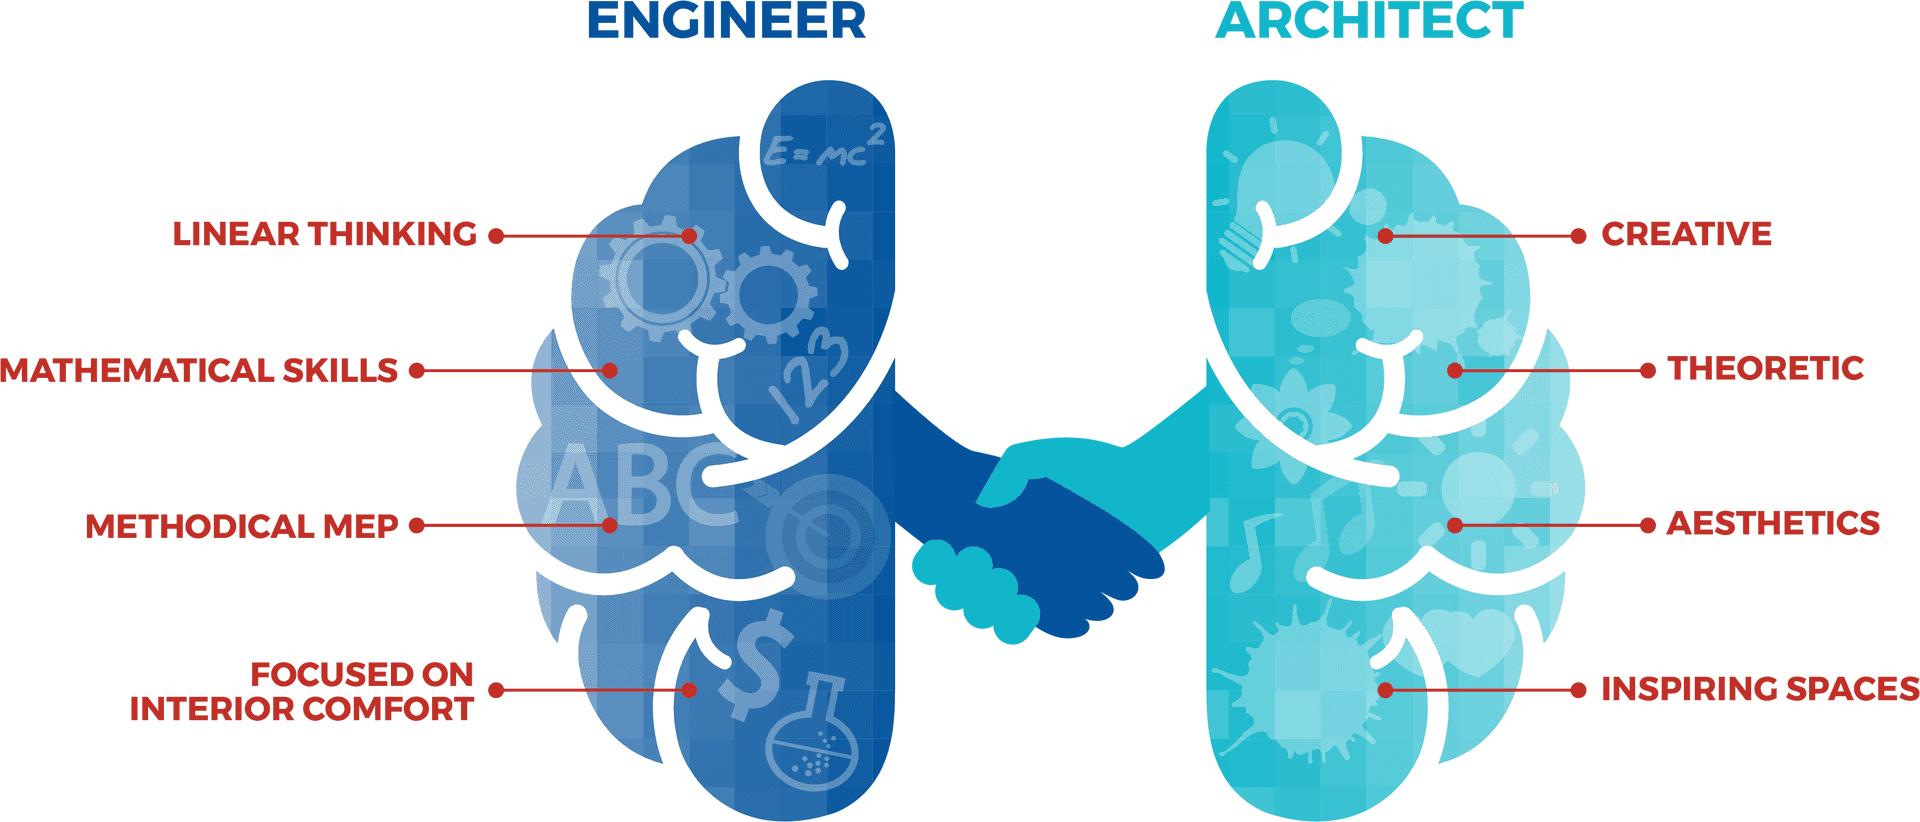 Engineer Versus Architect Mindset PNG